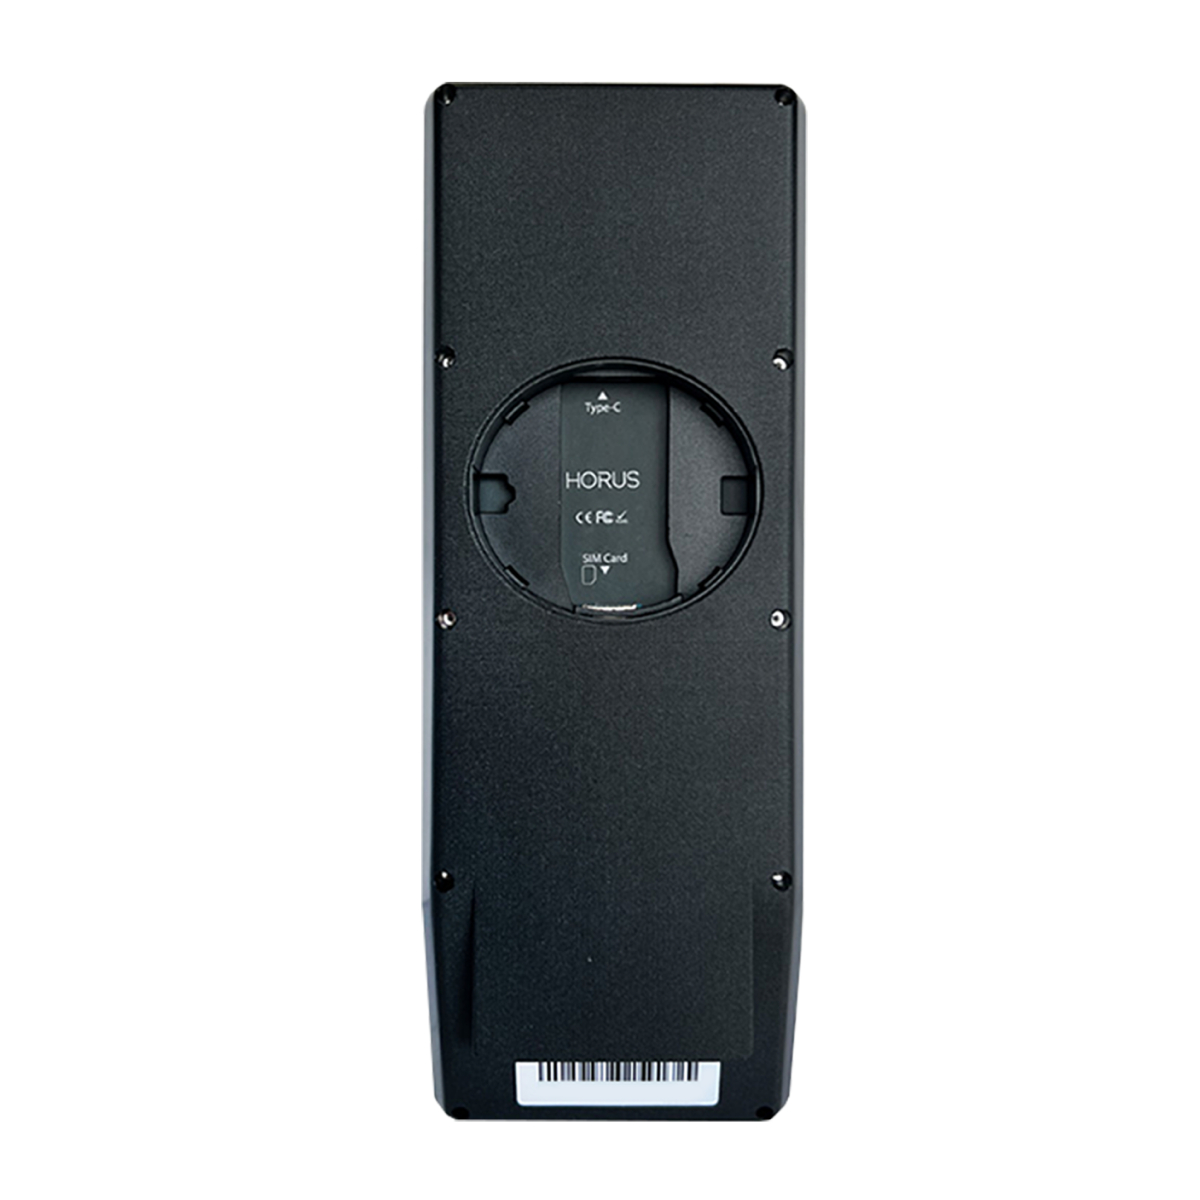 IOMO Biometric FCA-4500